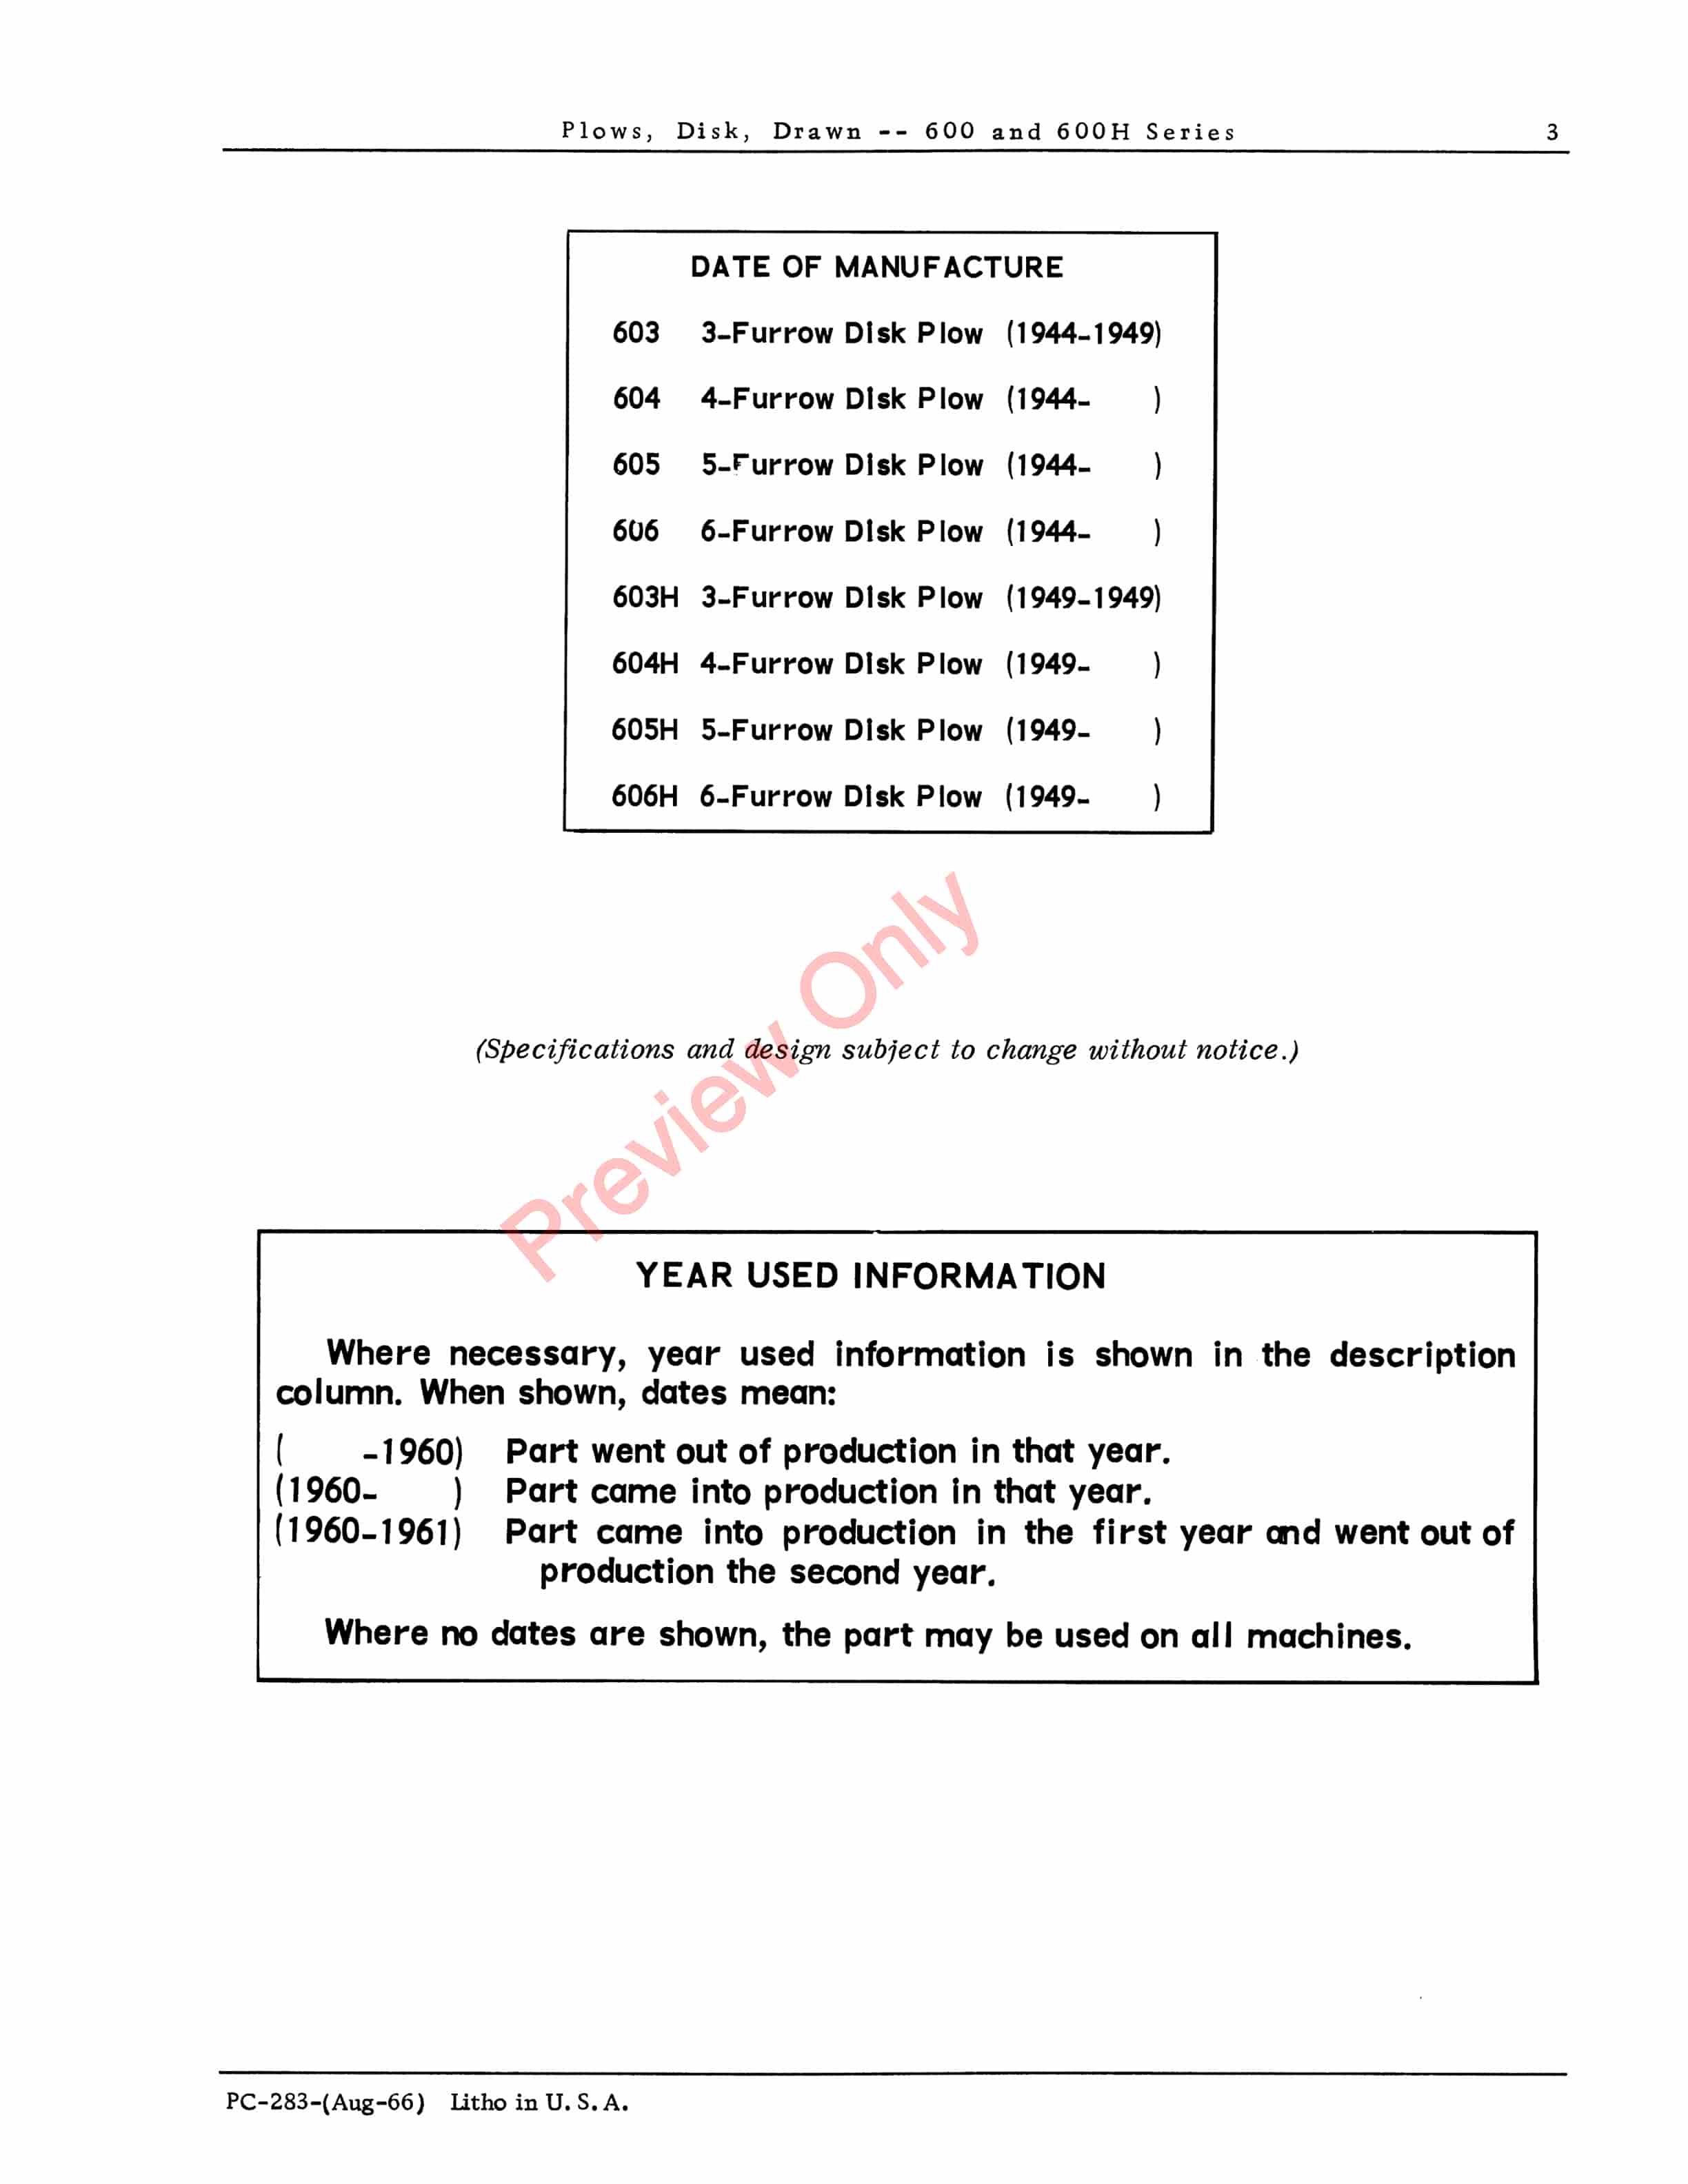 John Deere 600, 600H Drawn Disk Plows Parts Catalog PC283 01AUG66-5